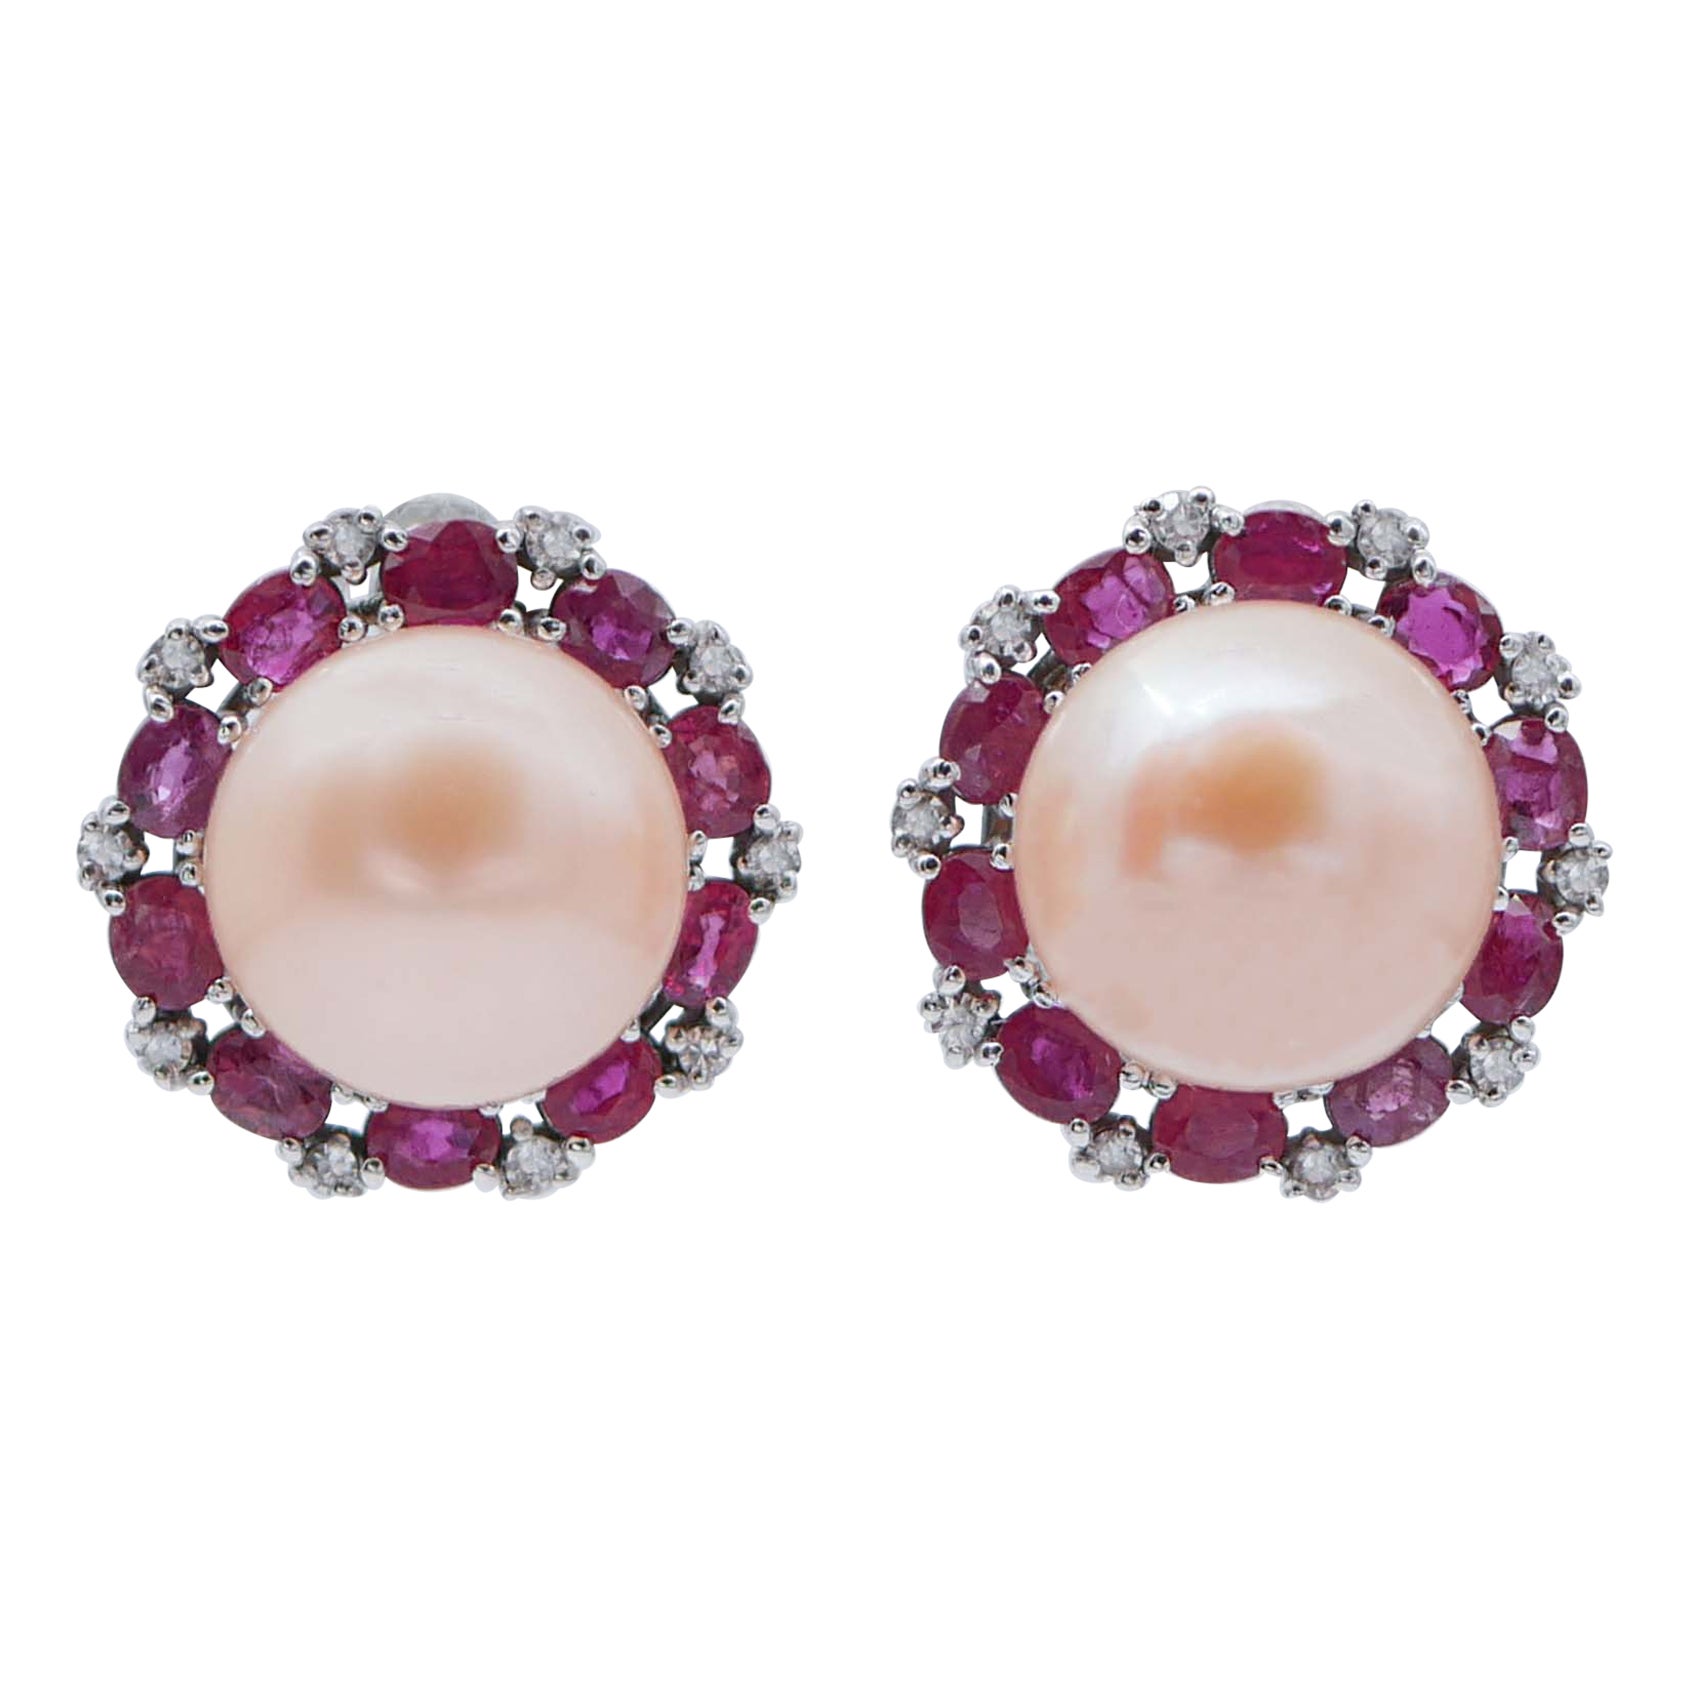 Pearls, Rubies, Diamonds, 14 Karat White Gold Earrings